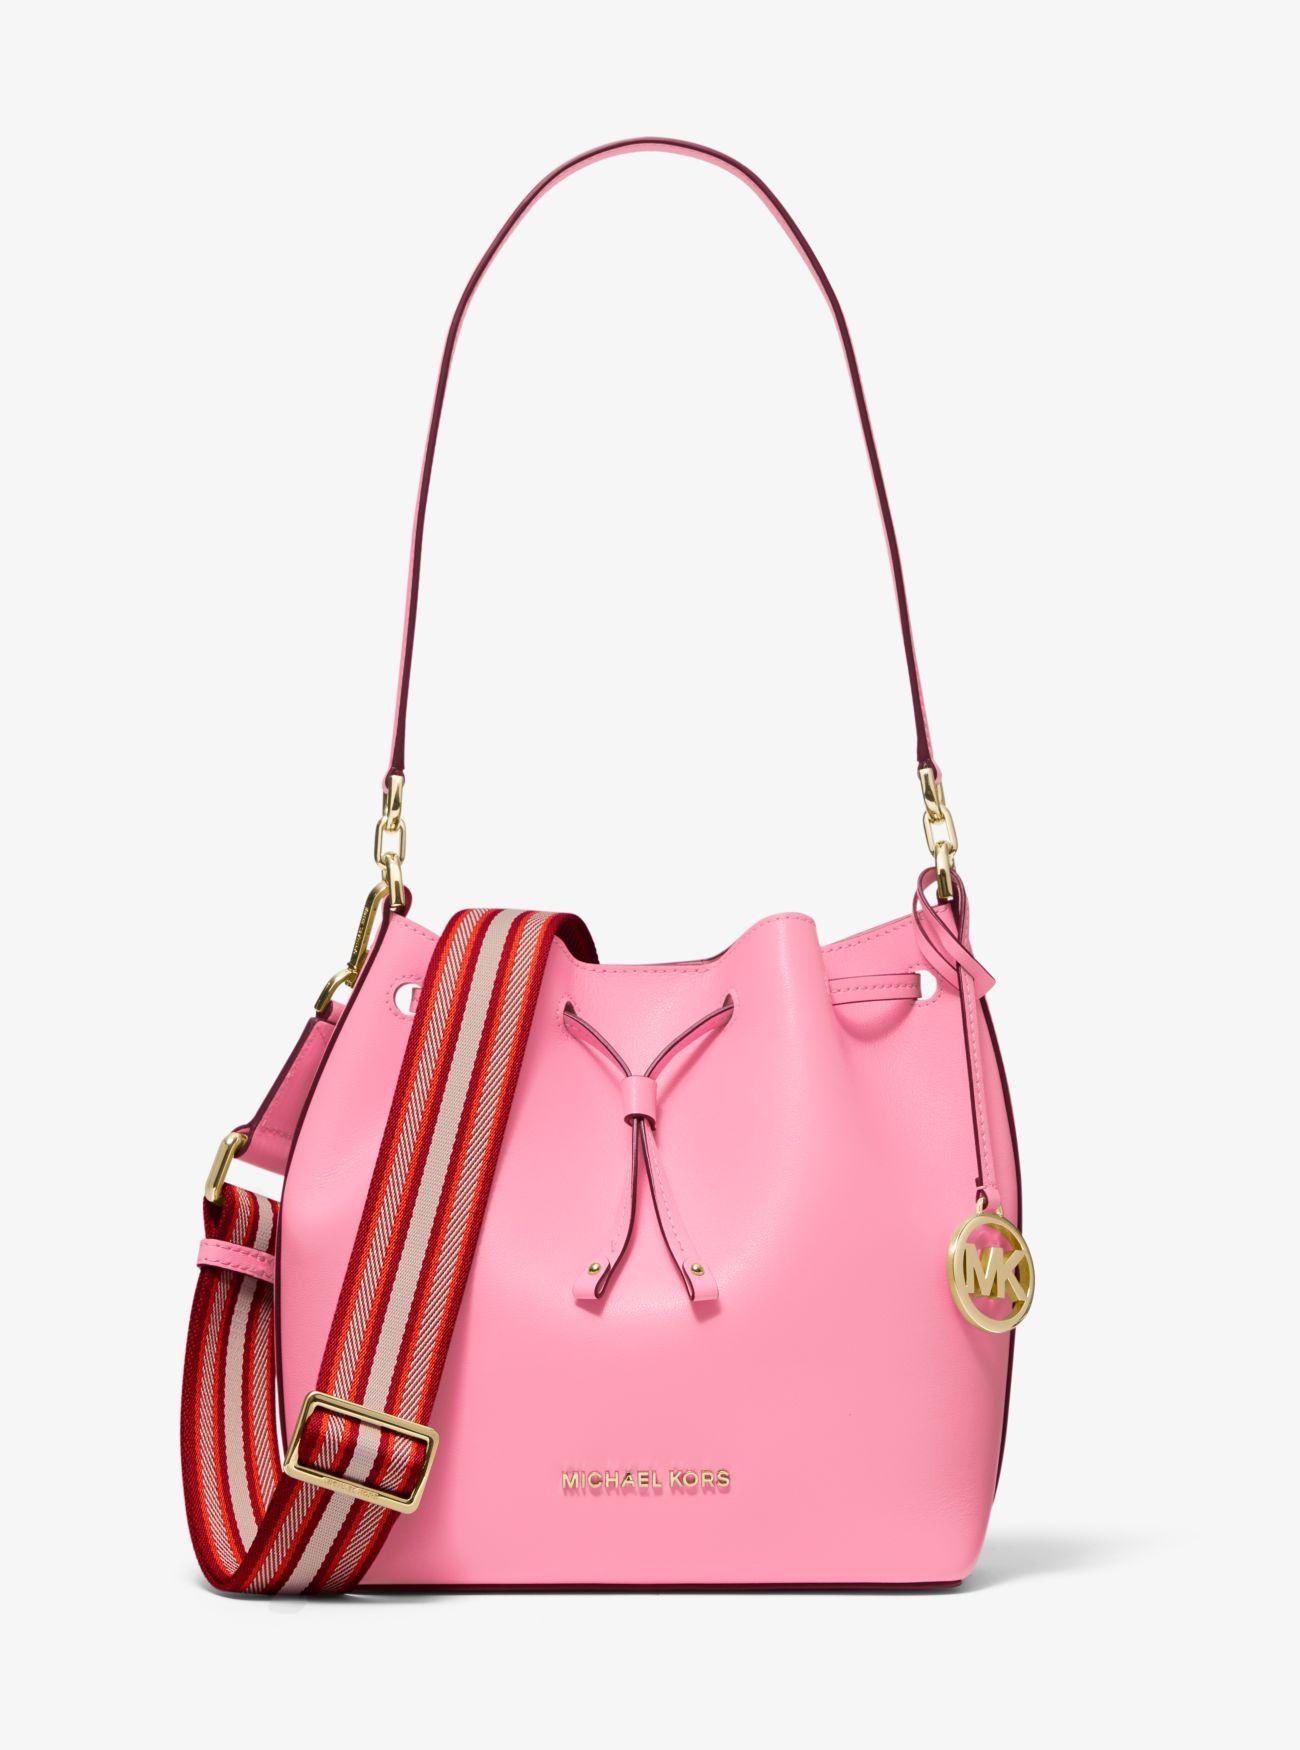 Michael Kors Eden Medium Leather Bucket Bag in Pink - Lyst